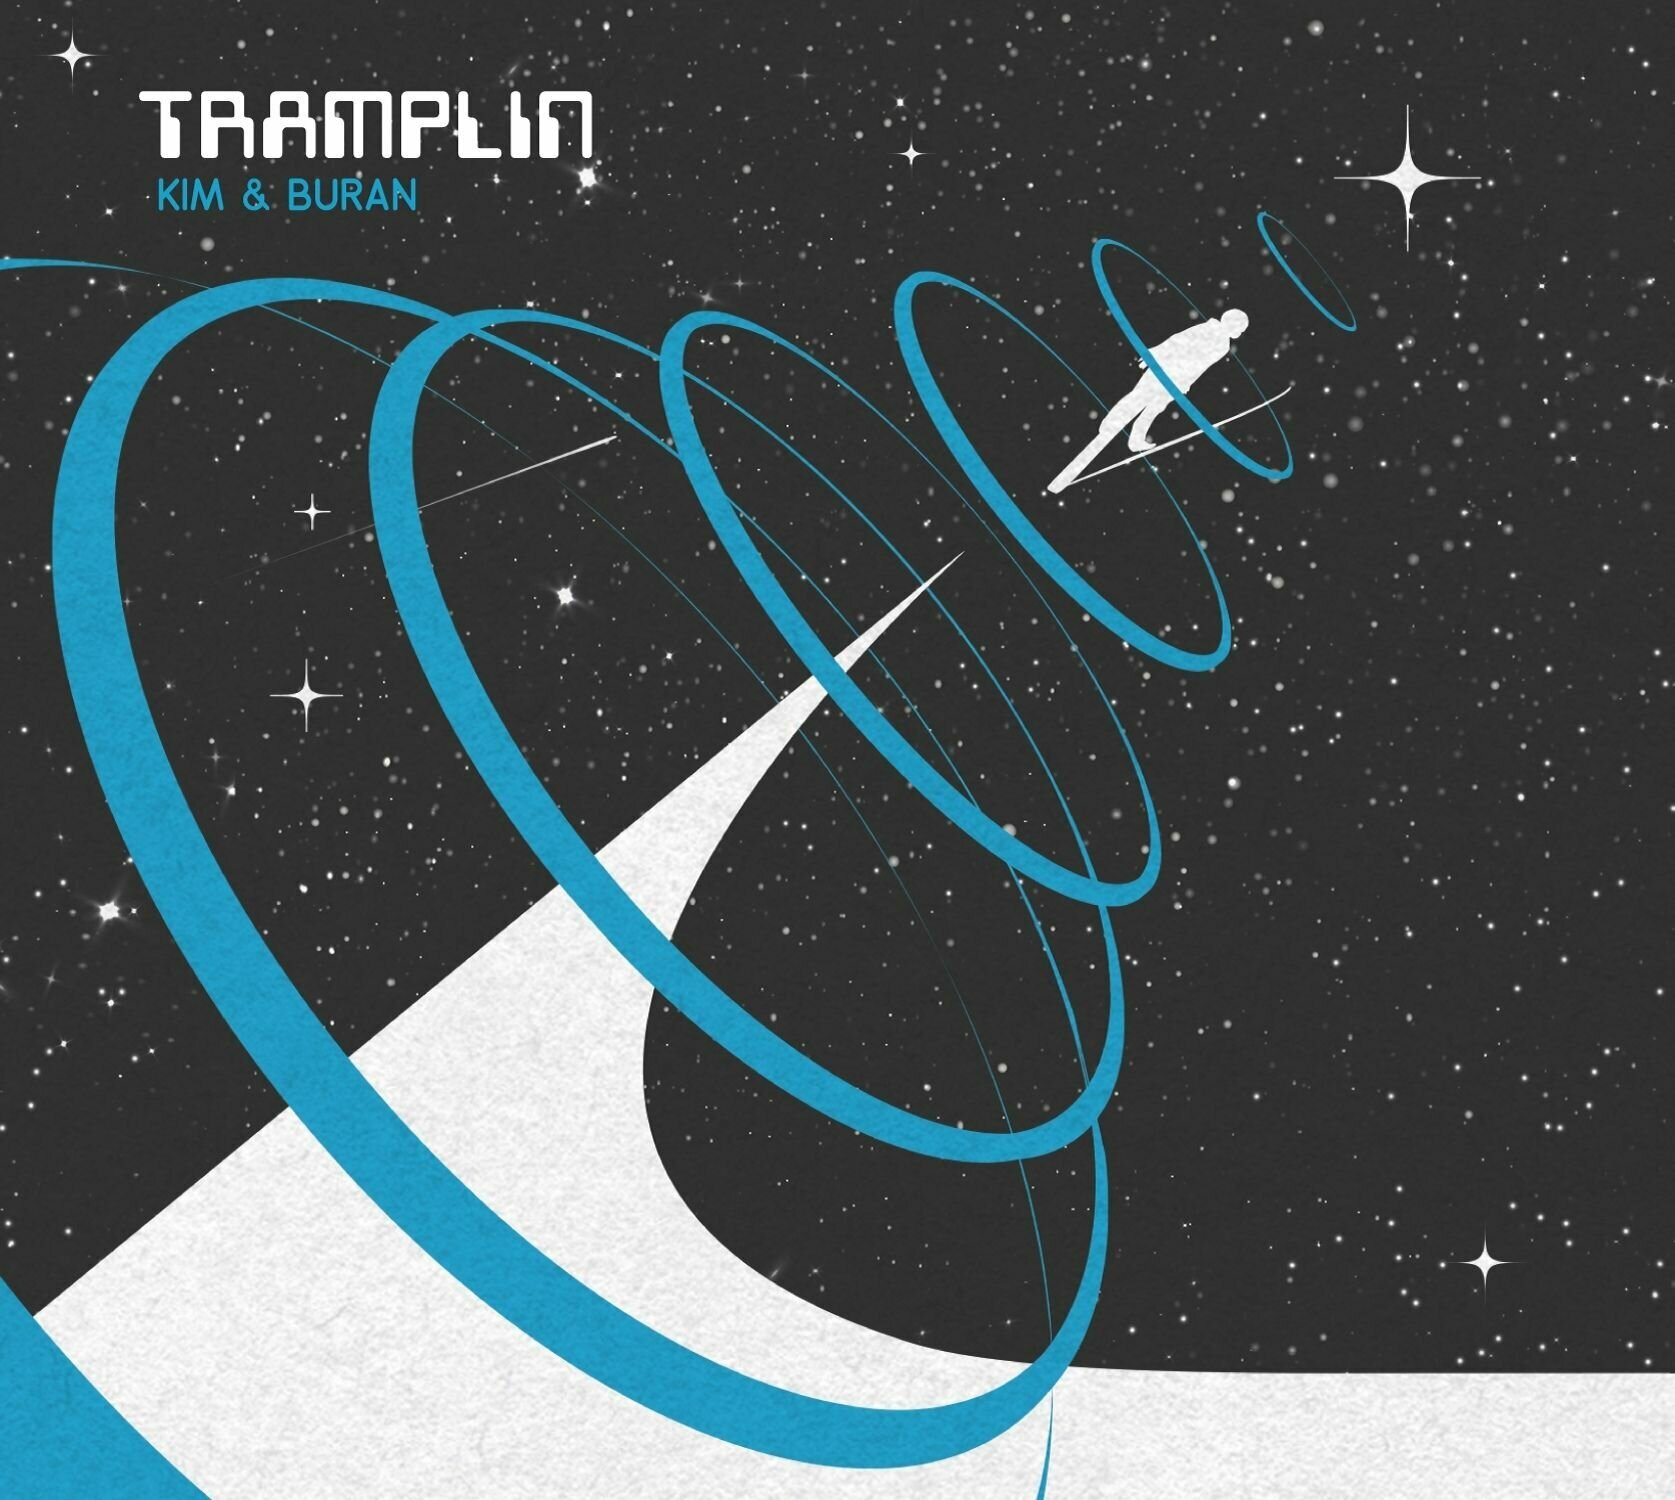 CD KIM & BURAN - "Tramplin" (2022) (Limited Expanded Edition)